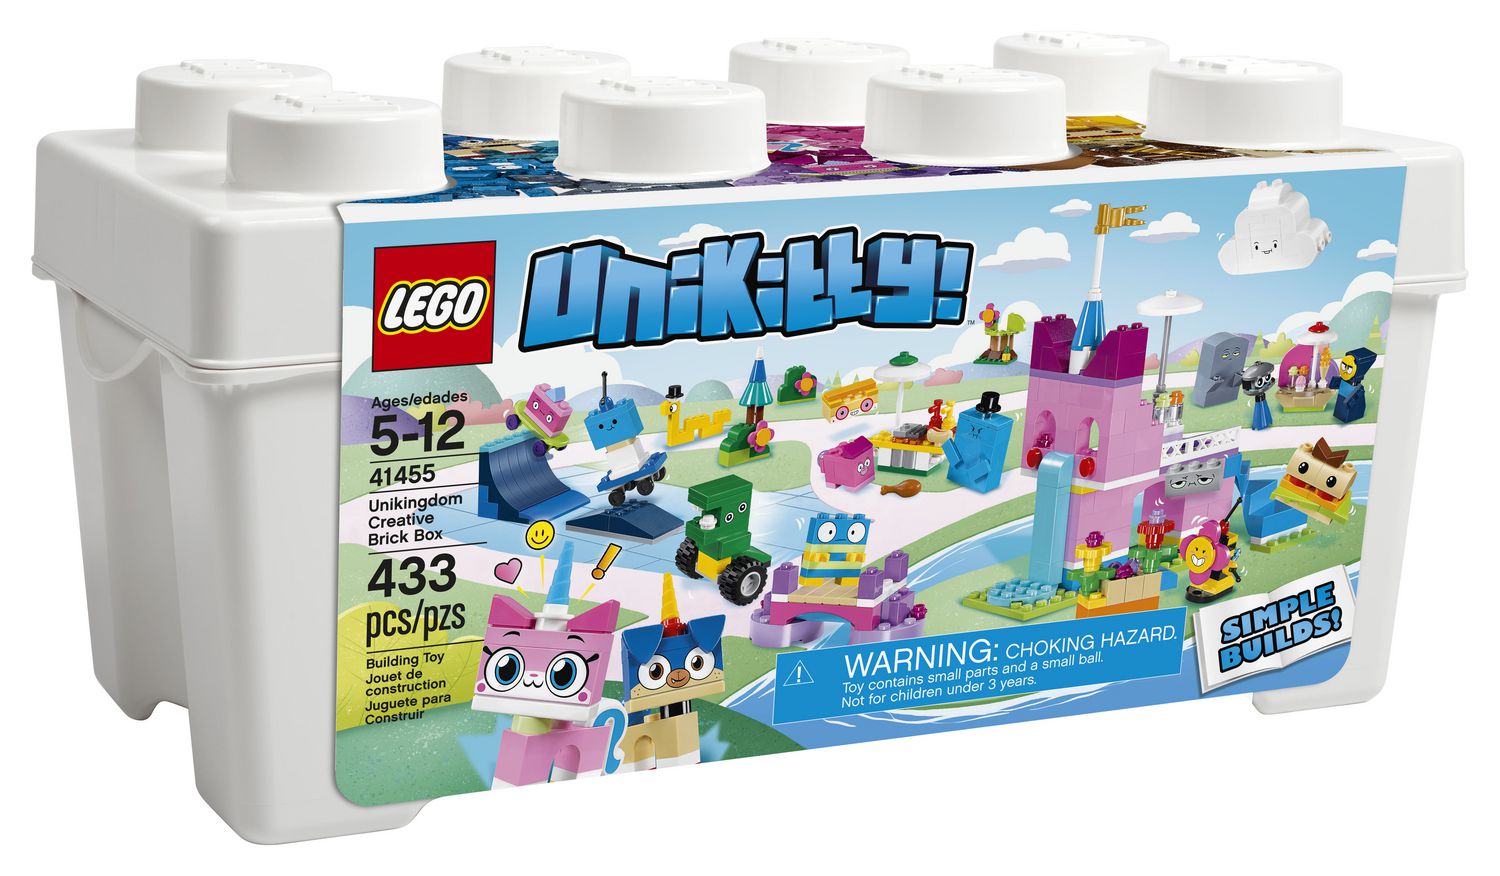 LEGO Unikitty! Unikingdom Creative Brick Box 41455 Building Kit